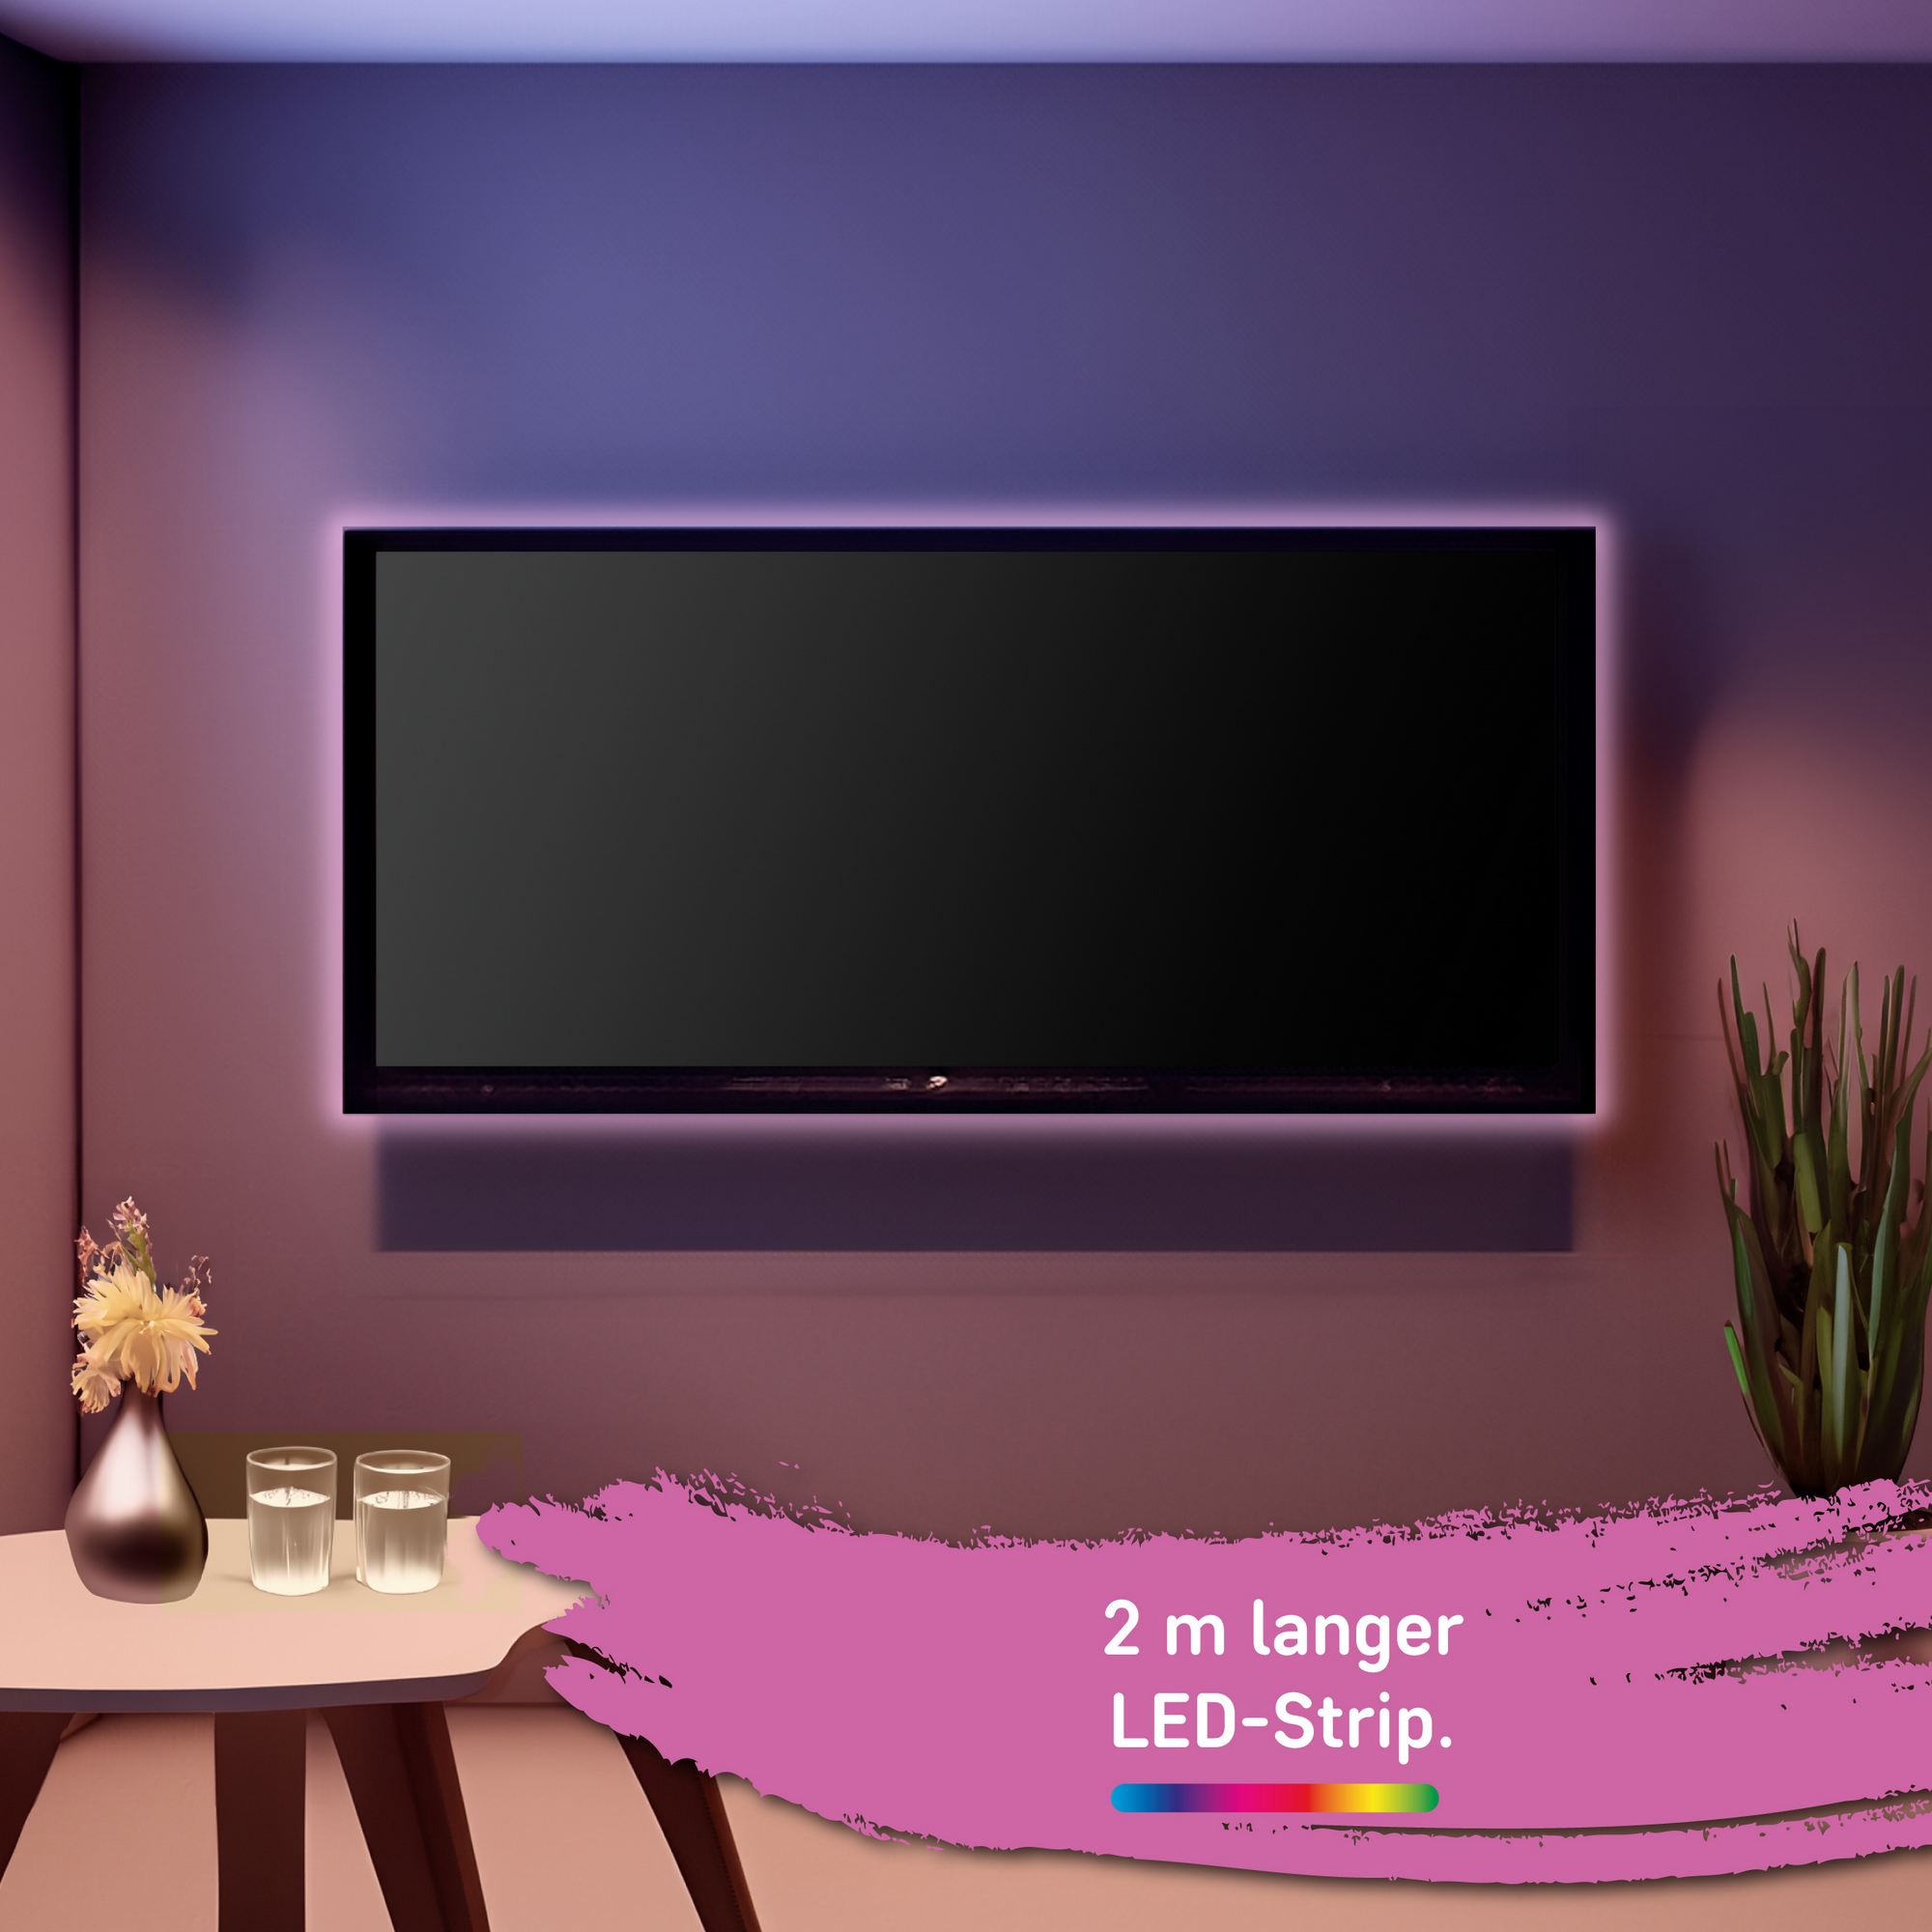 LED-Streifen 'Smart' RGB 2 m + product picture